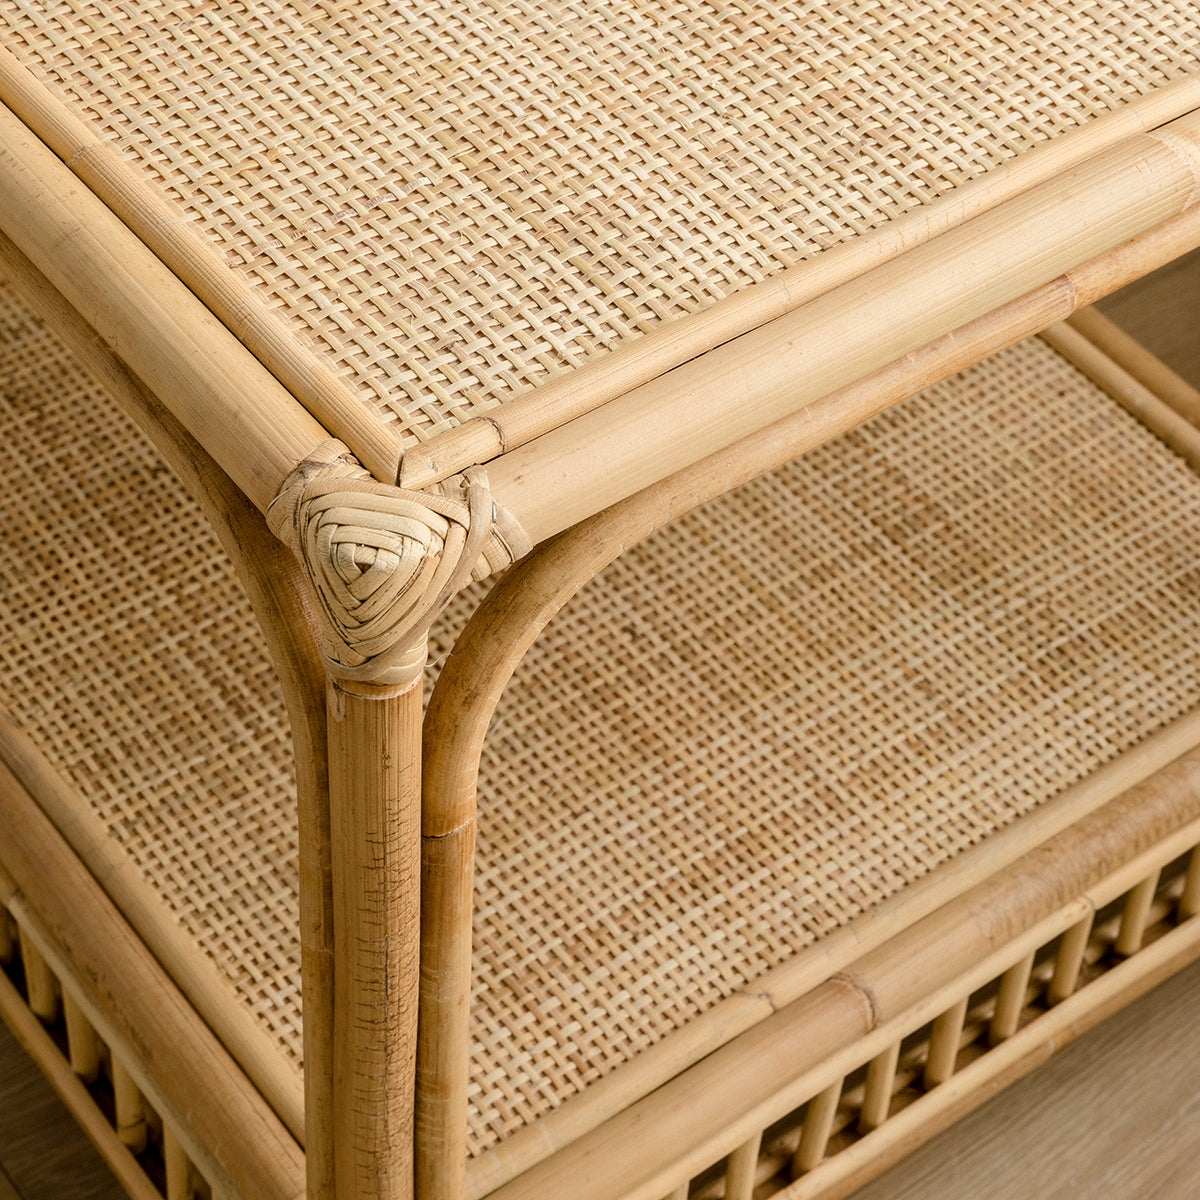 Rattan Bedside Table | Cane Side table | Bamboo table - Ananya - Akway